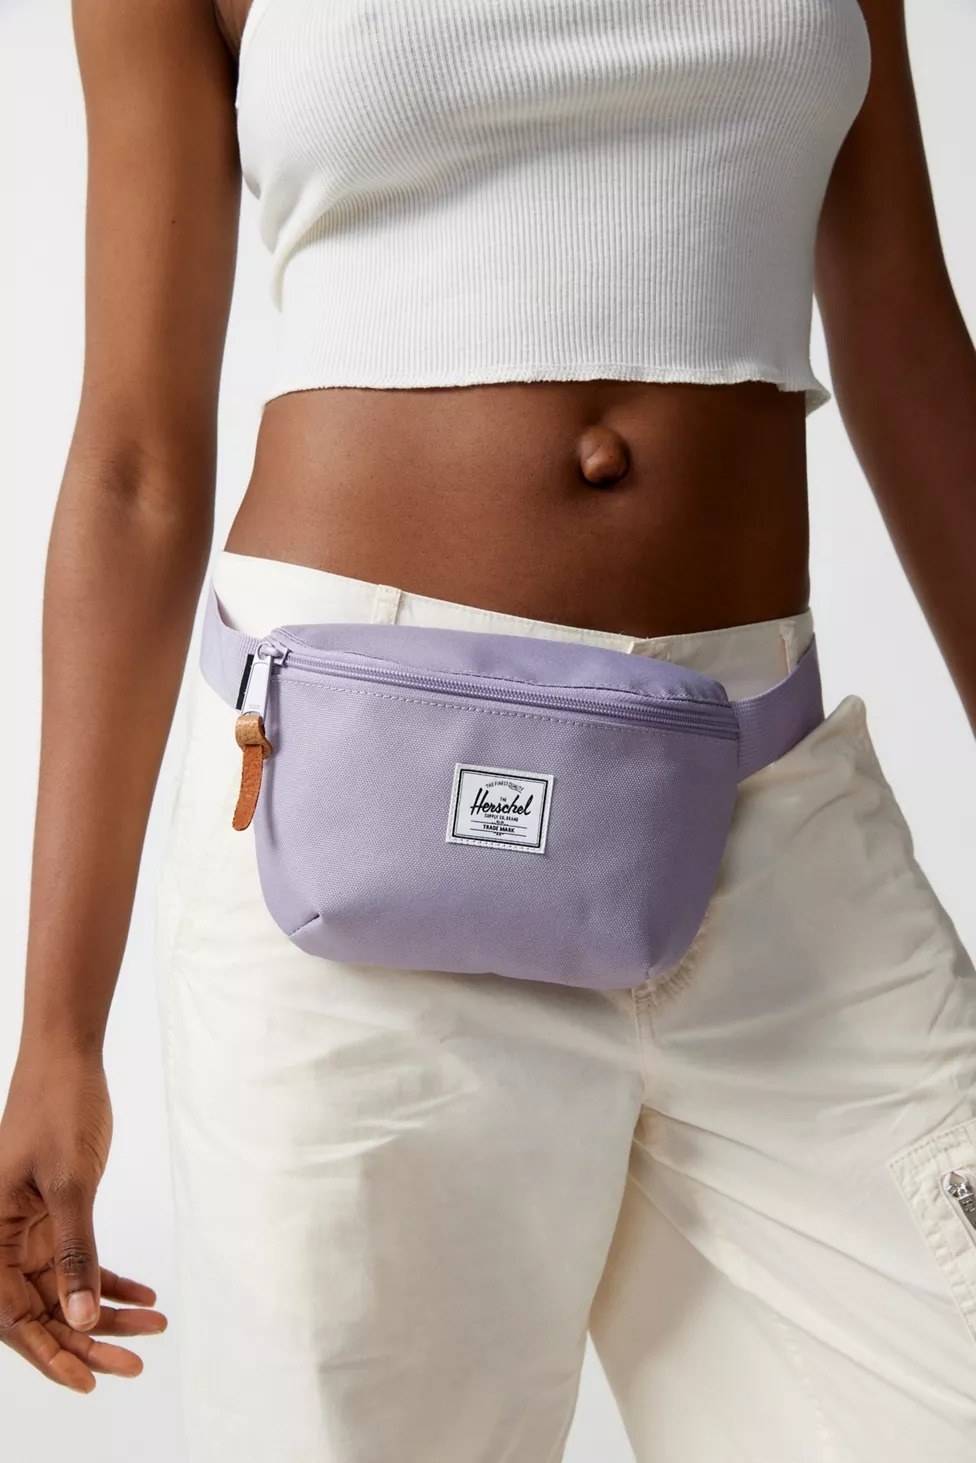 model wearing purple belt bag around waist